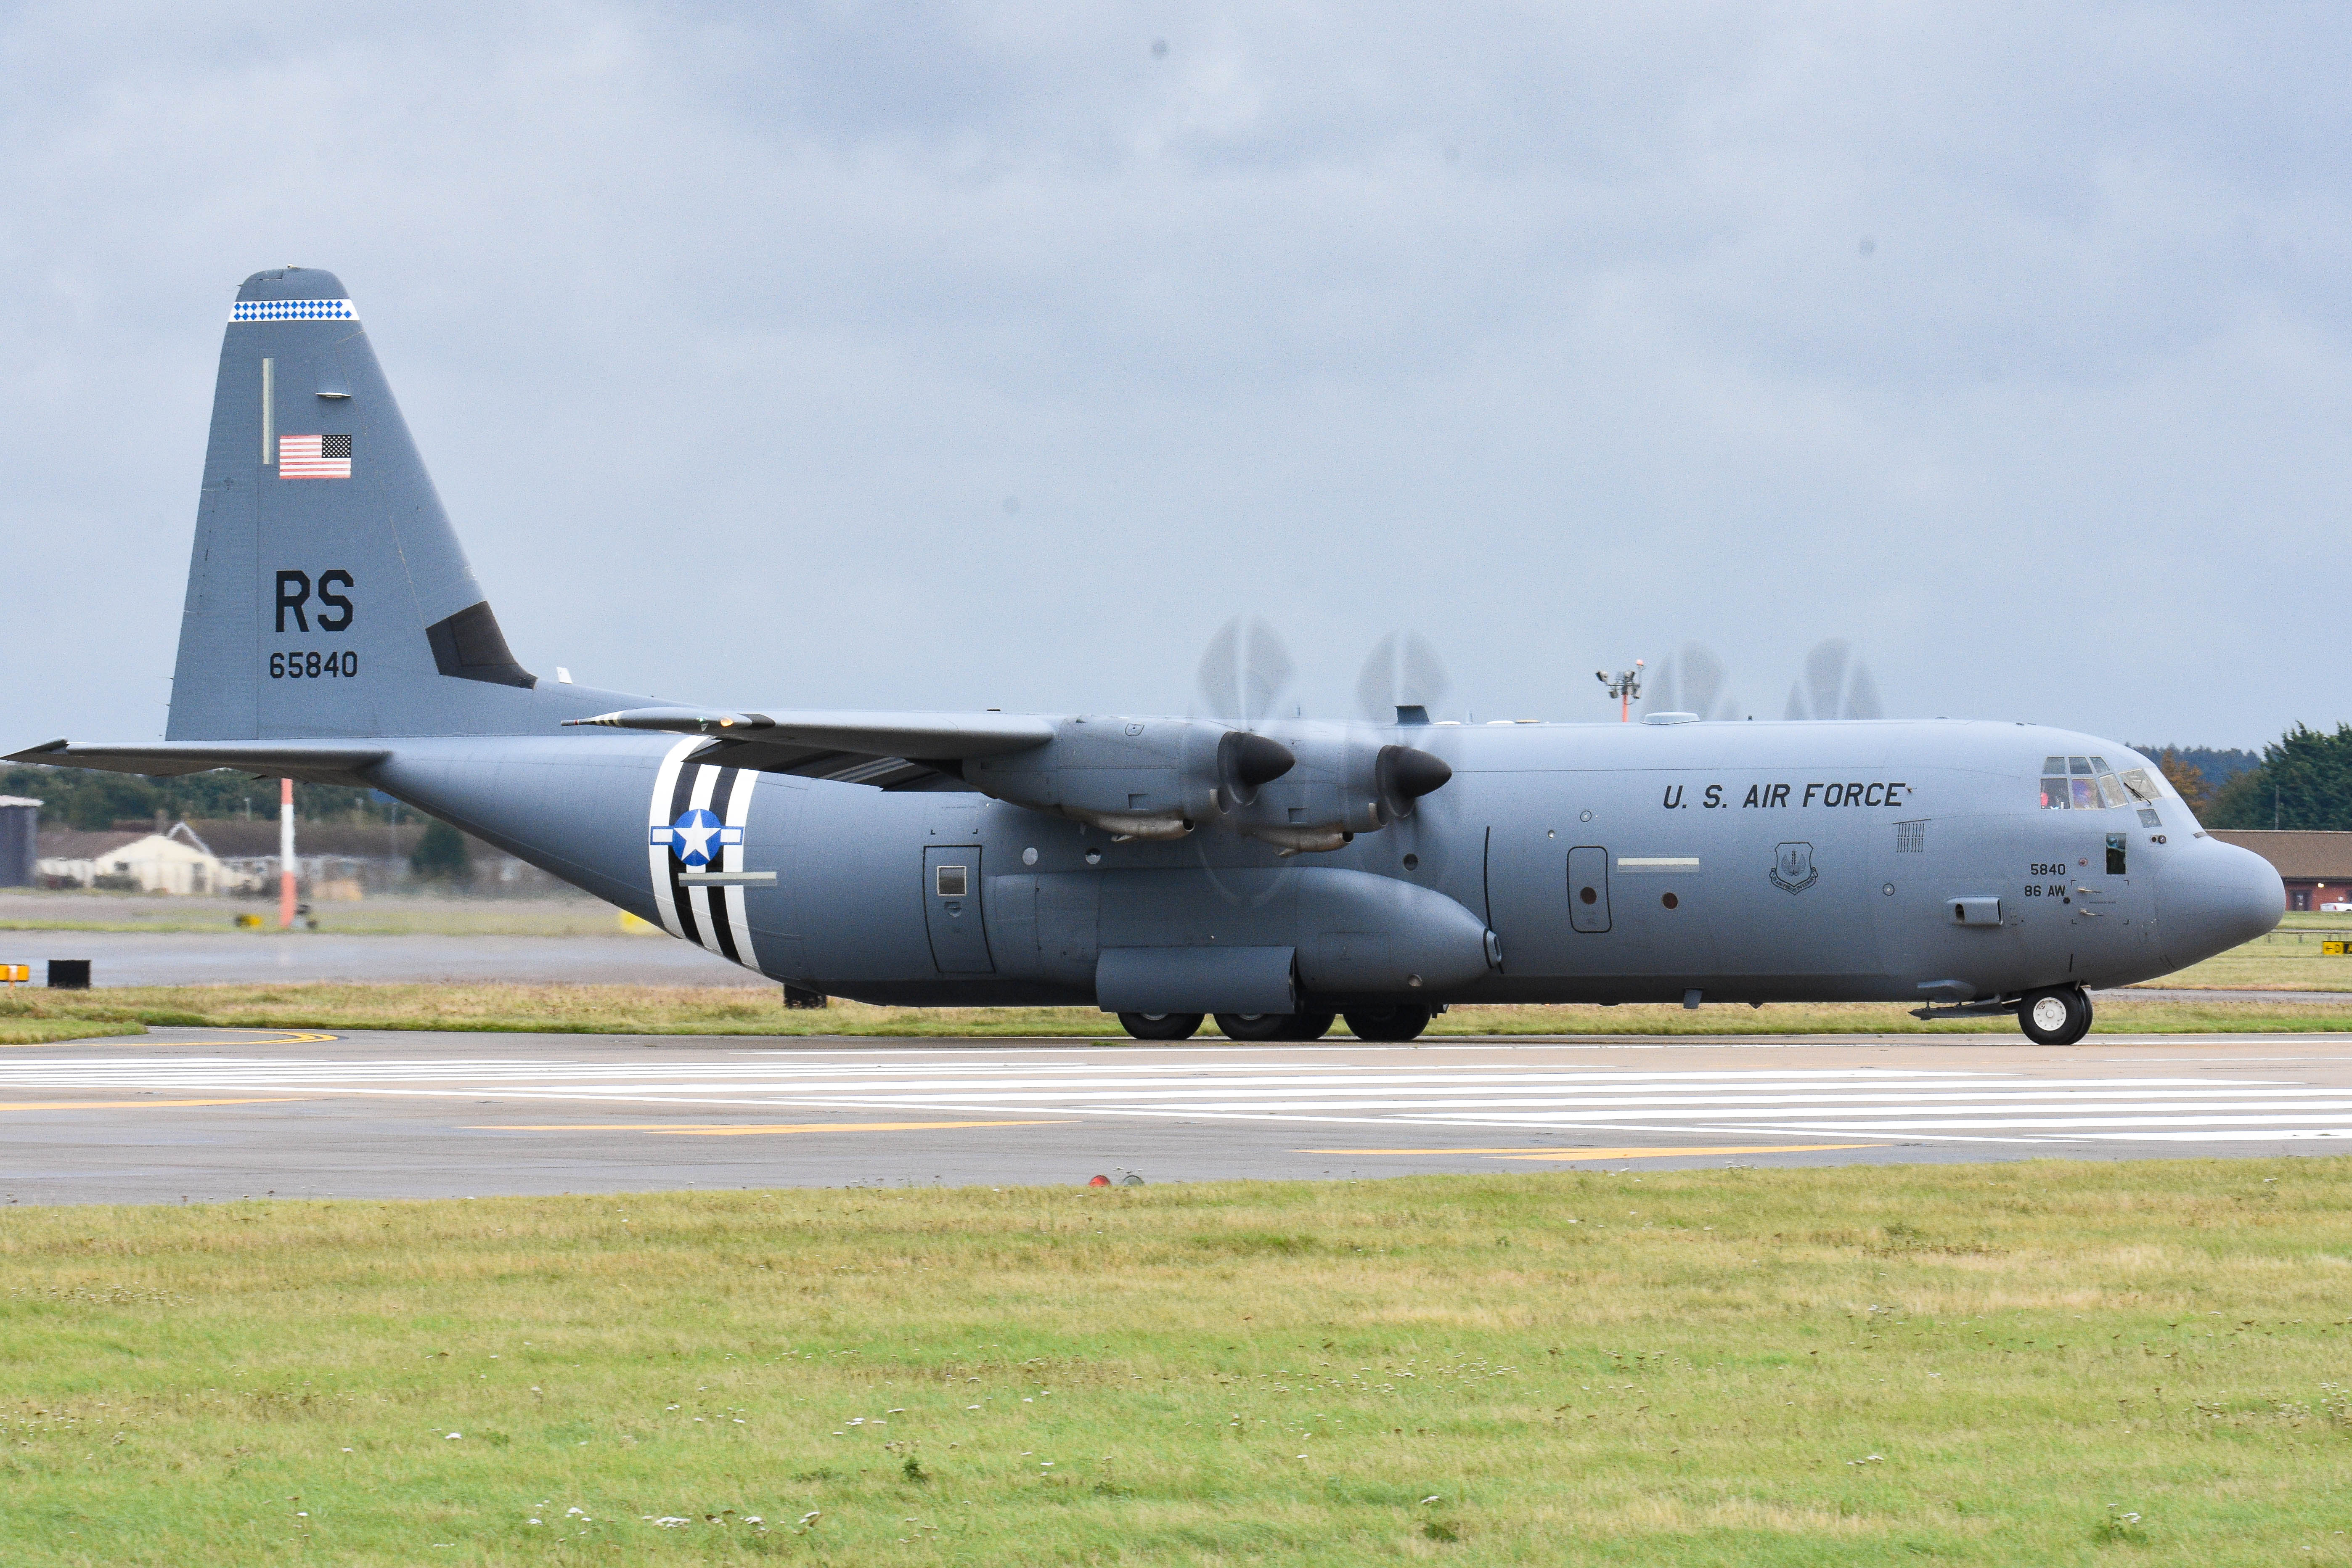 16-5840/165840 USAF - United States Air Force Lockheed C-130 Hercules Airframe Information - AVSpotters.com